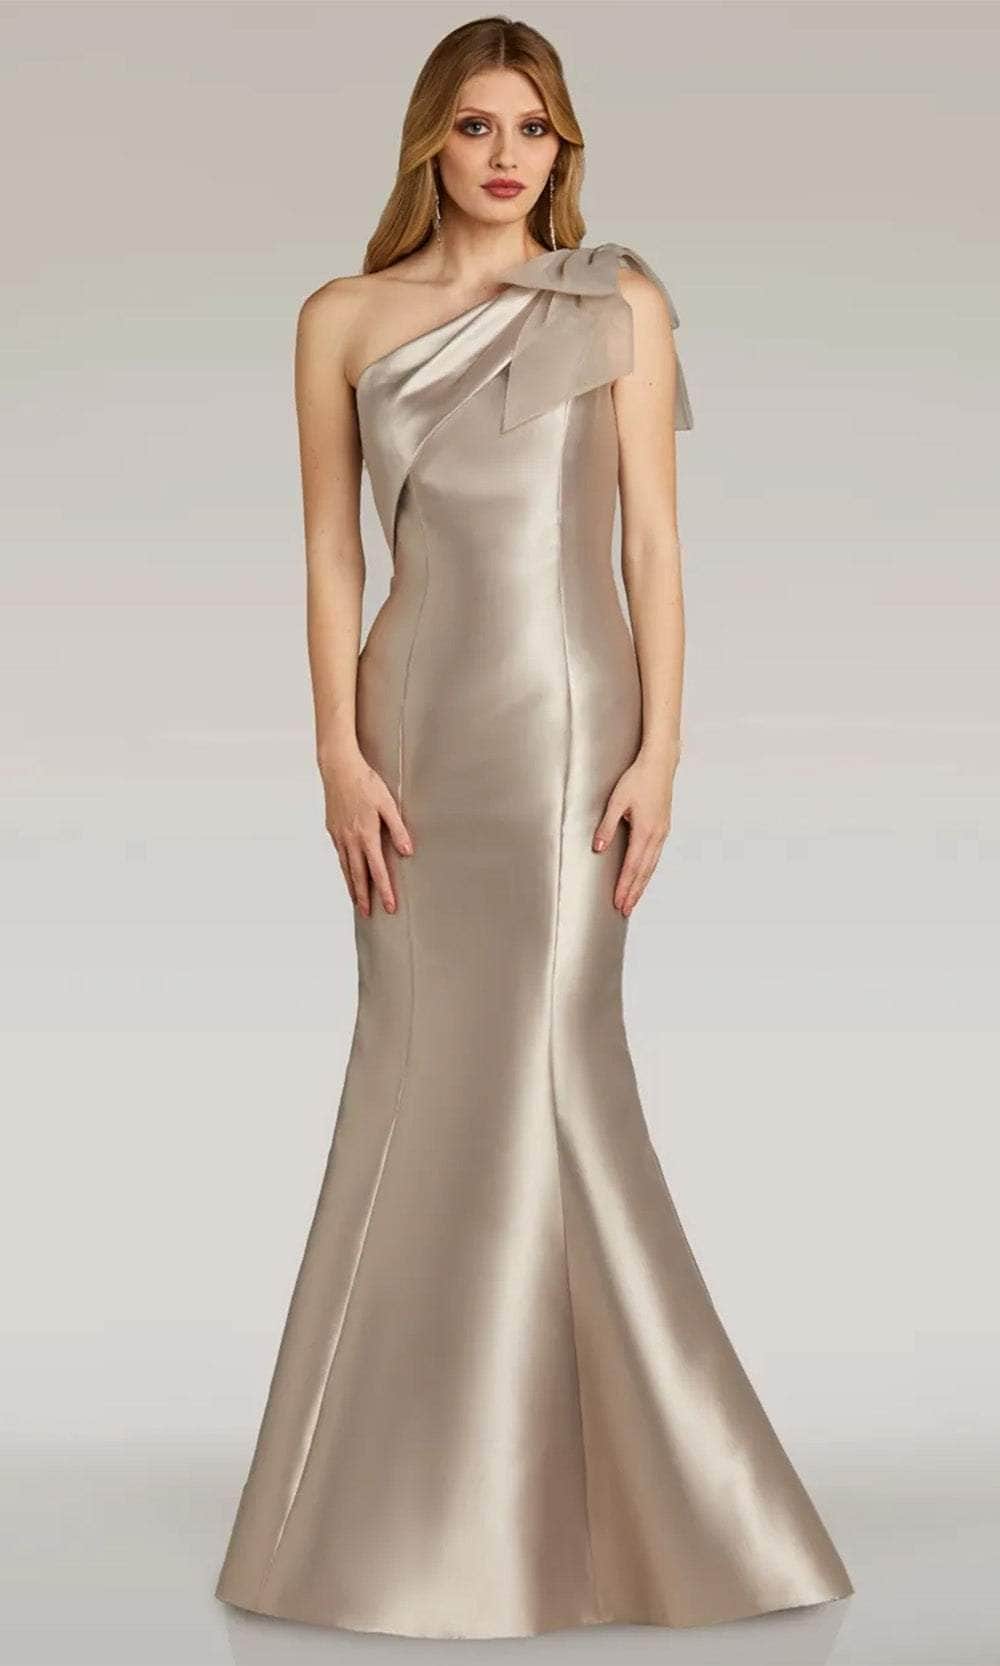 Gia Franco 12316 - Asymmetrical Neck Evening Dress
